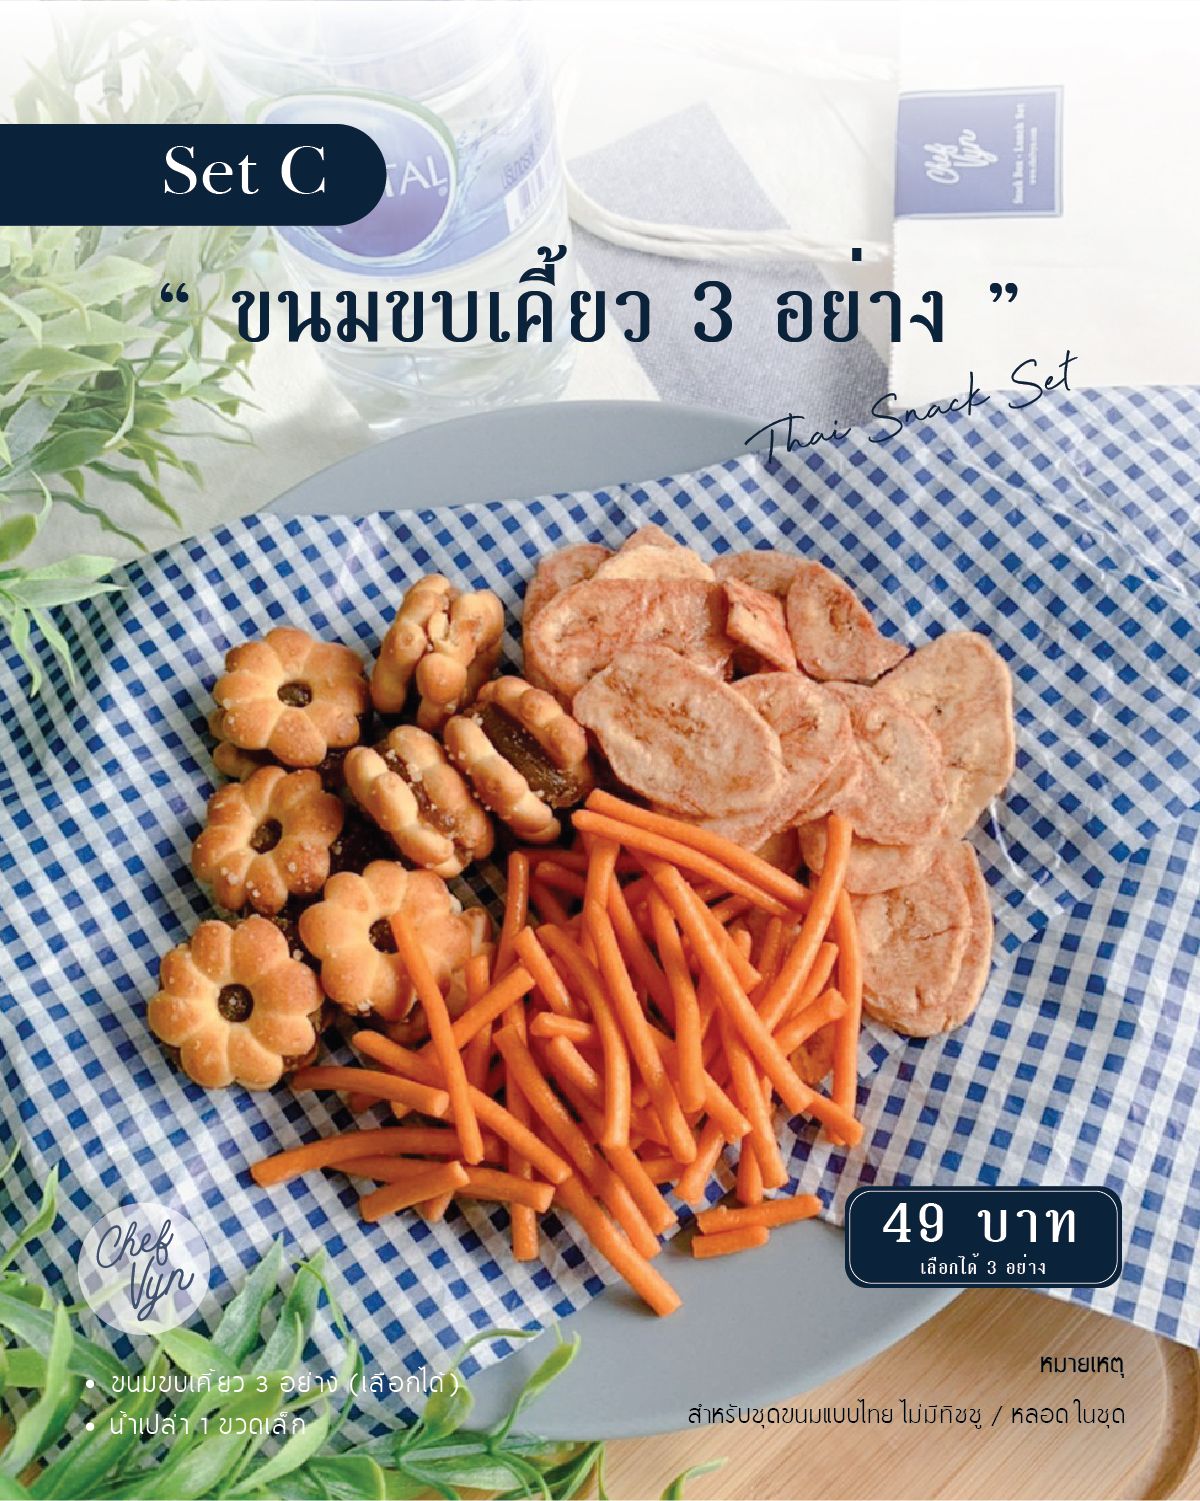 Thai Snack ขนม 3 อย่างพร้อมน้ำและถุง SetC 02 